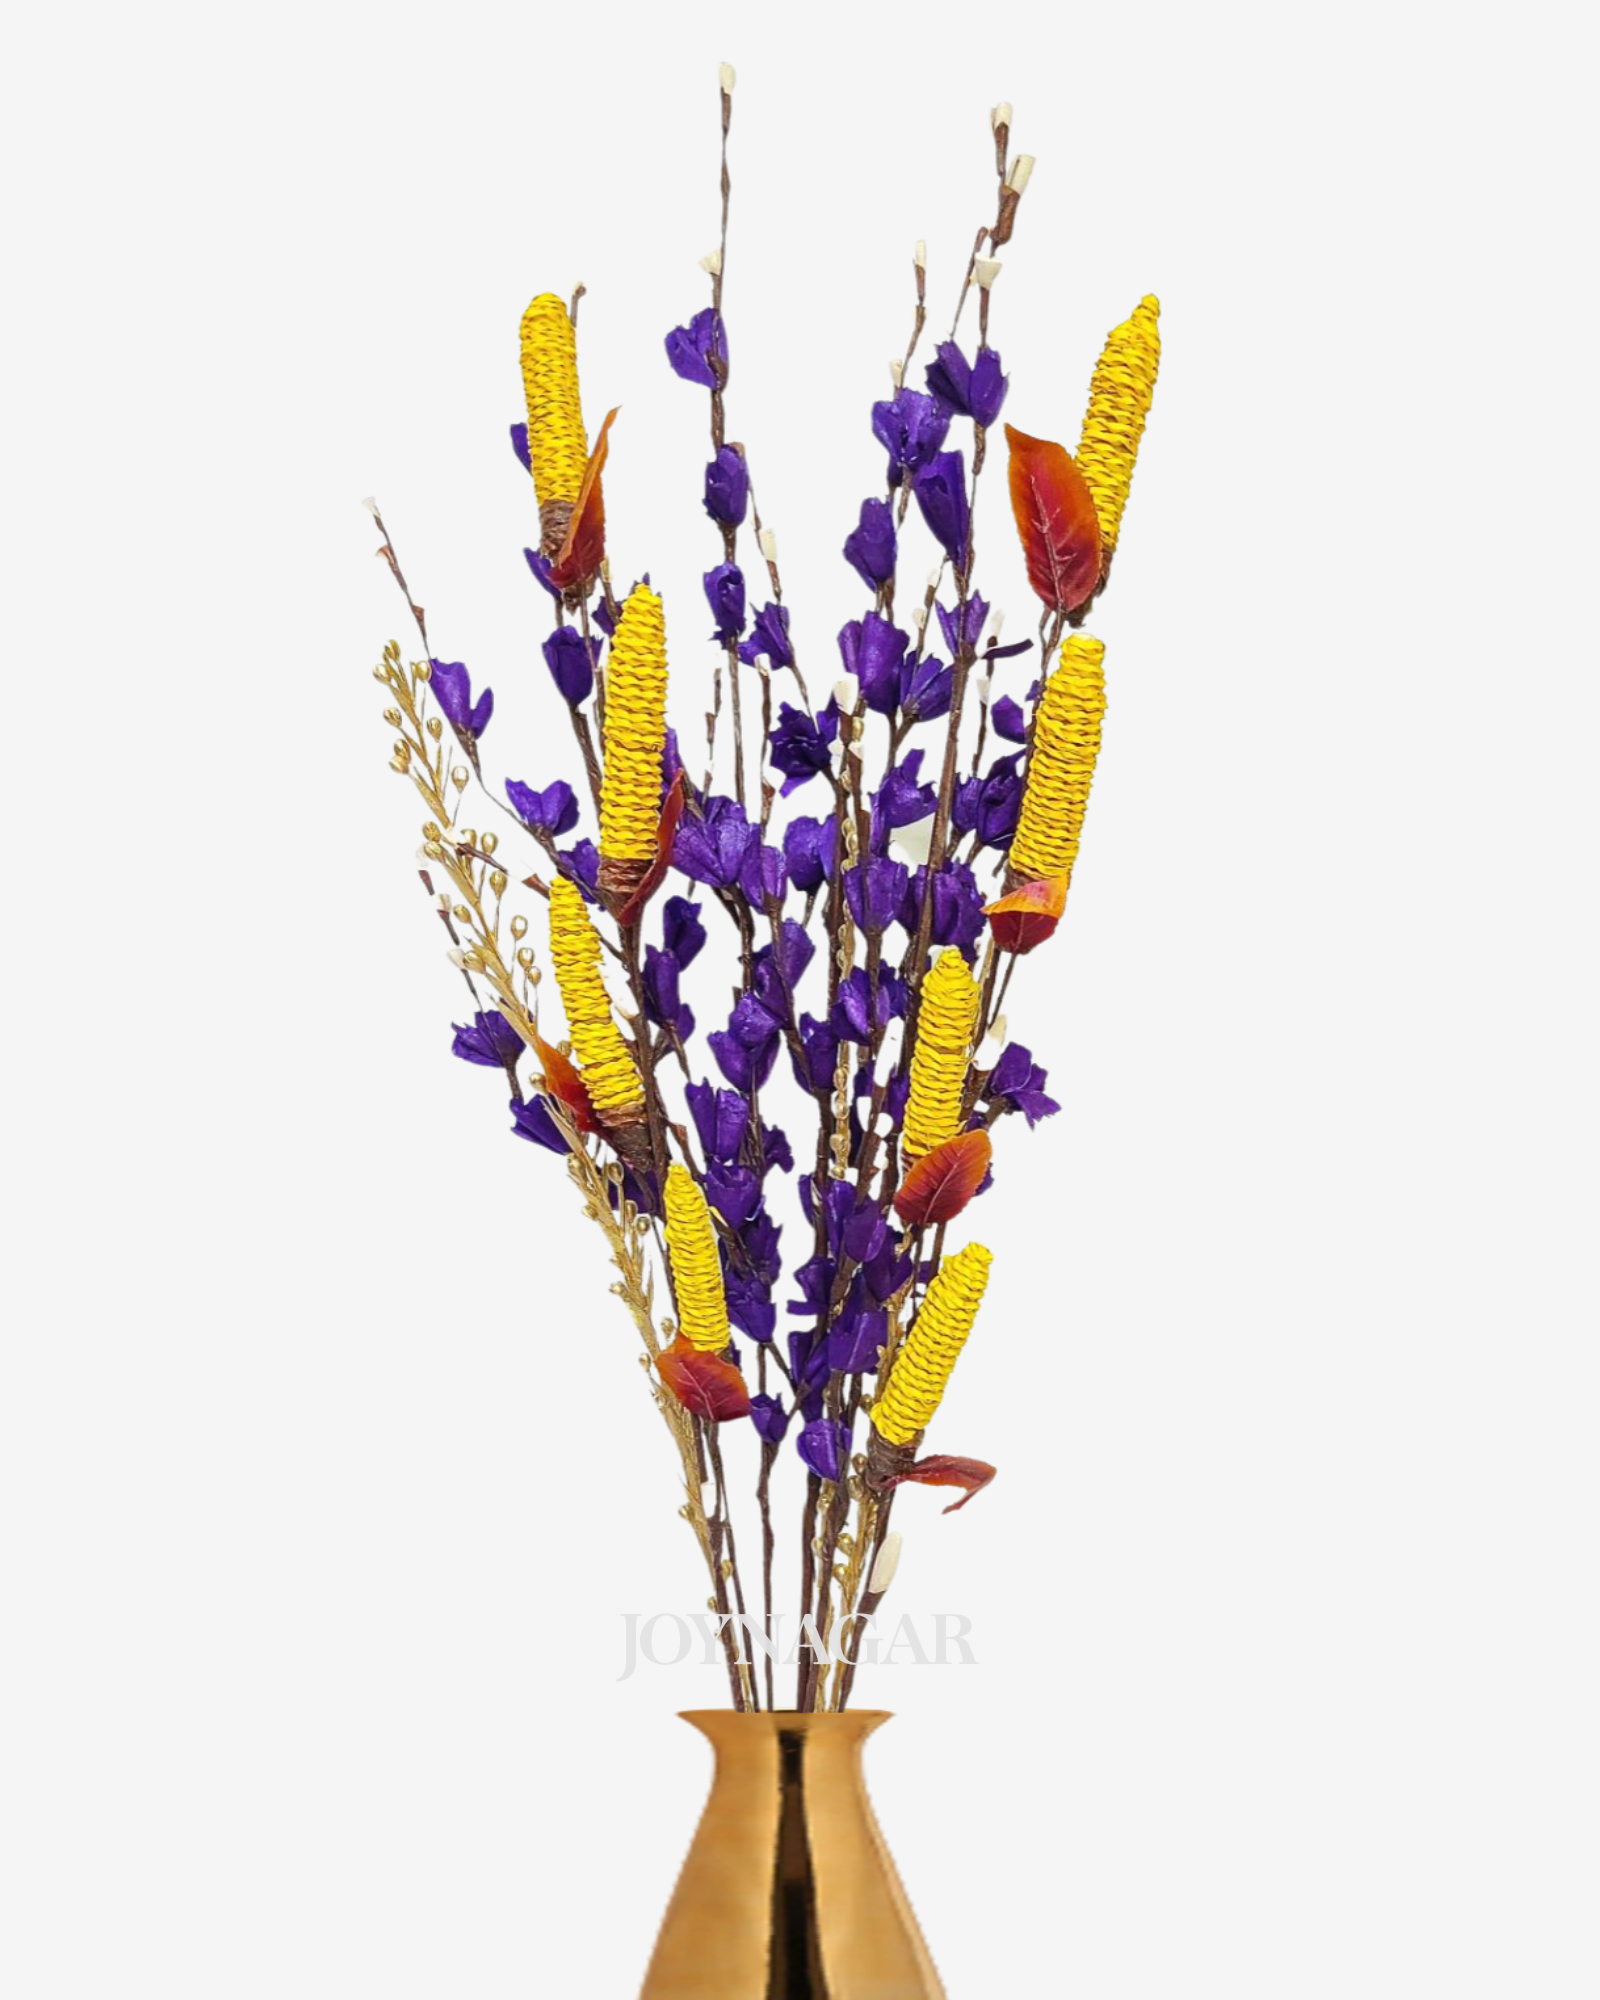 Sola Chain Pine Manella Flower Bunch Joynagar Handicraft Artificial Flowers color_random